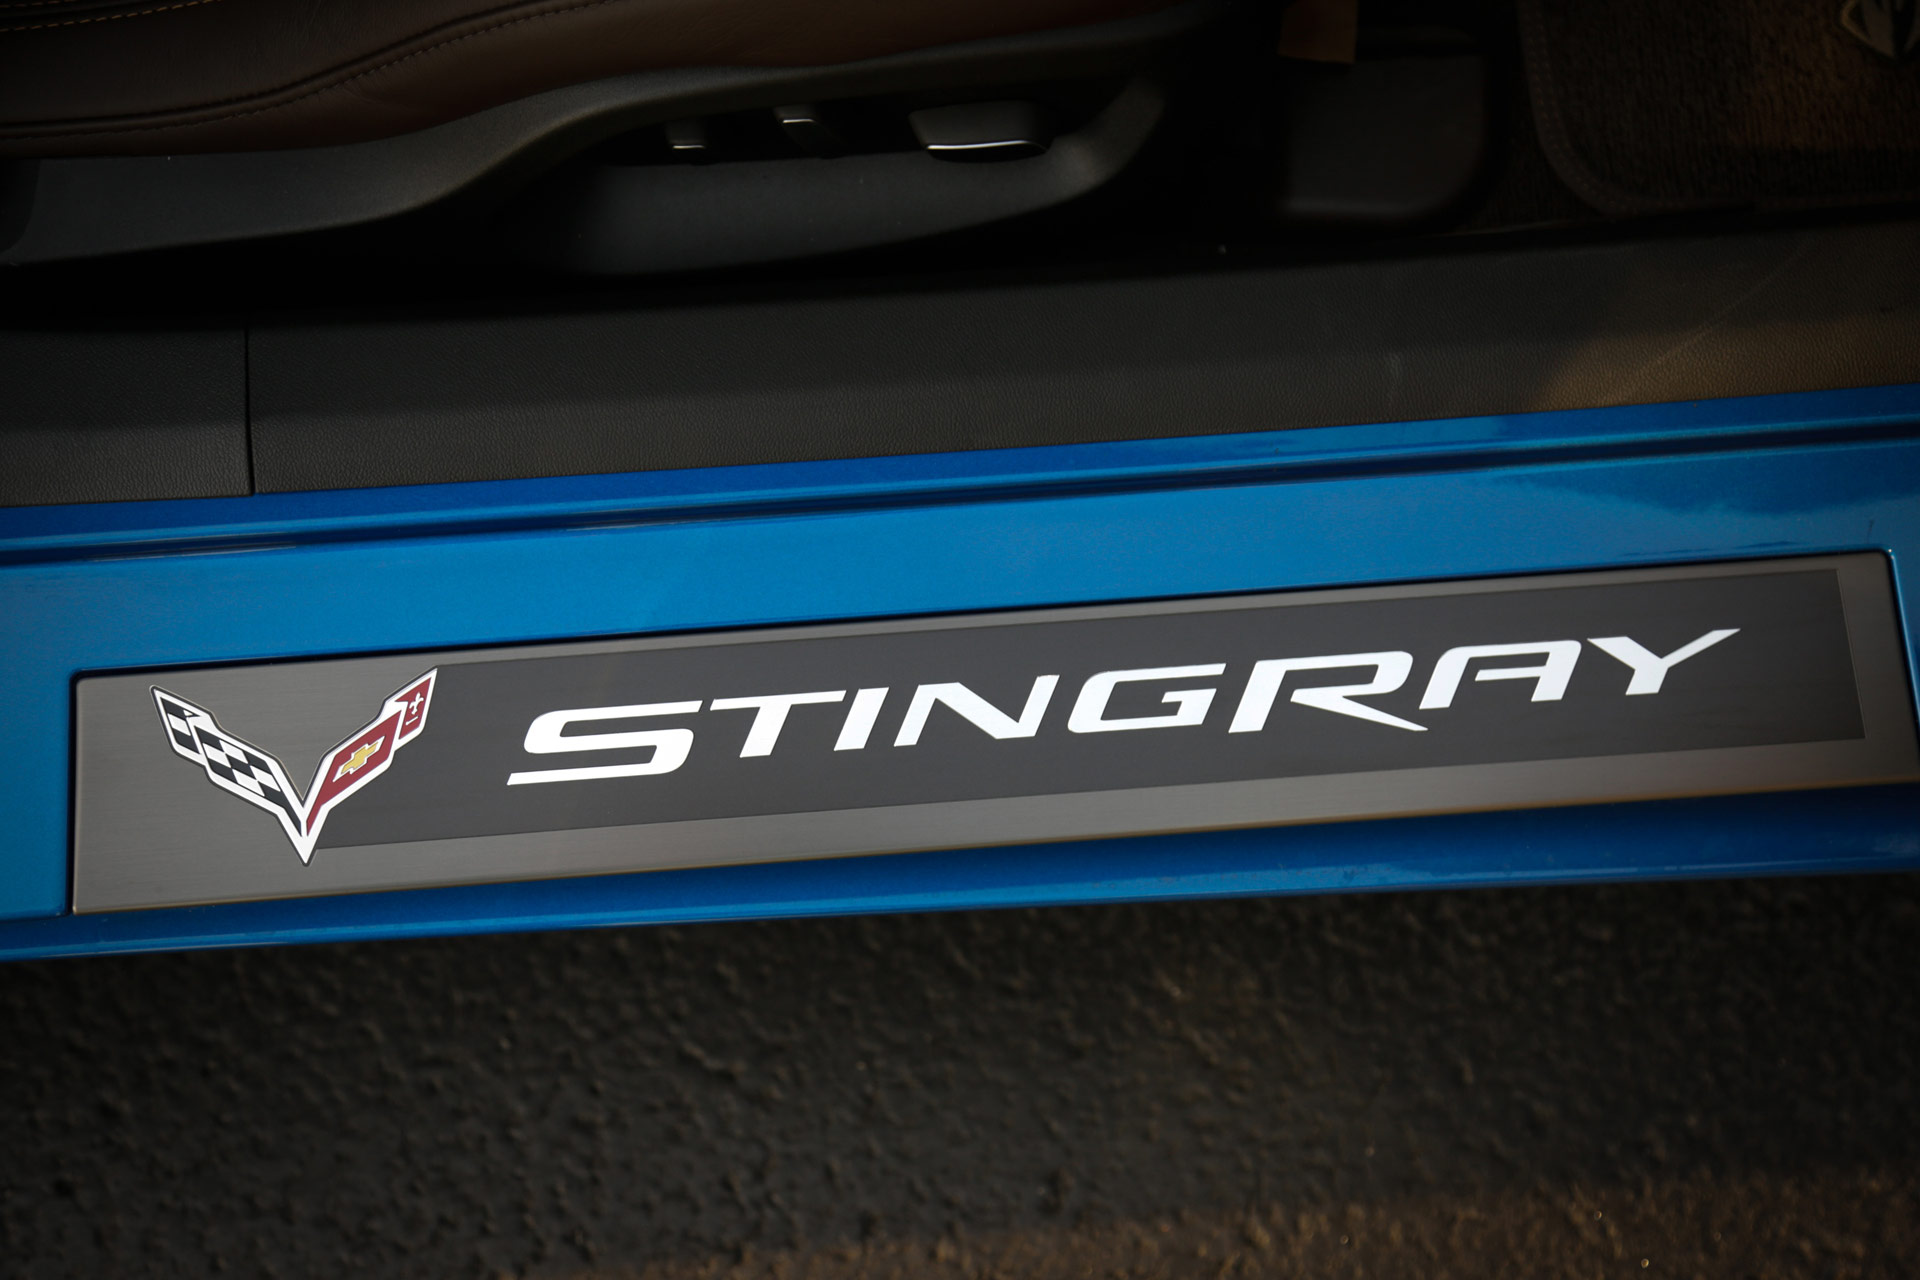 2014 Chevrolet Stingray Premiere Edition